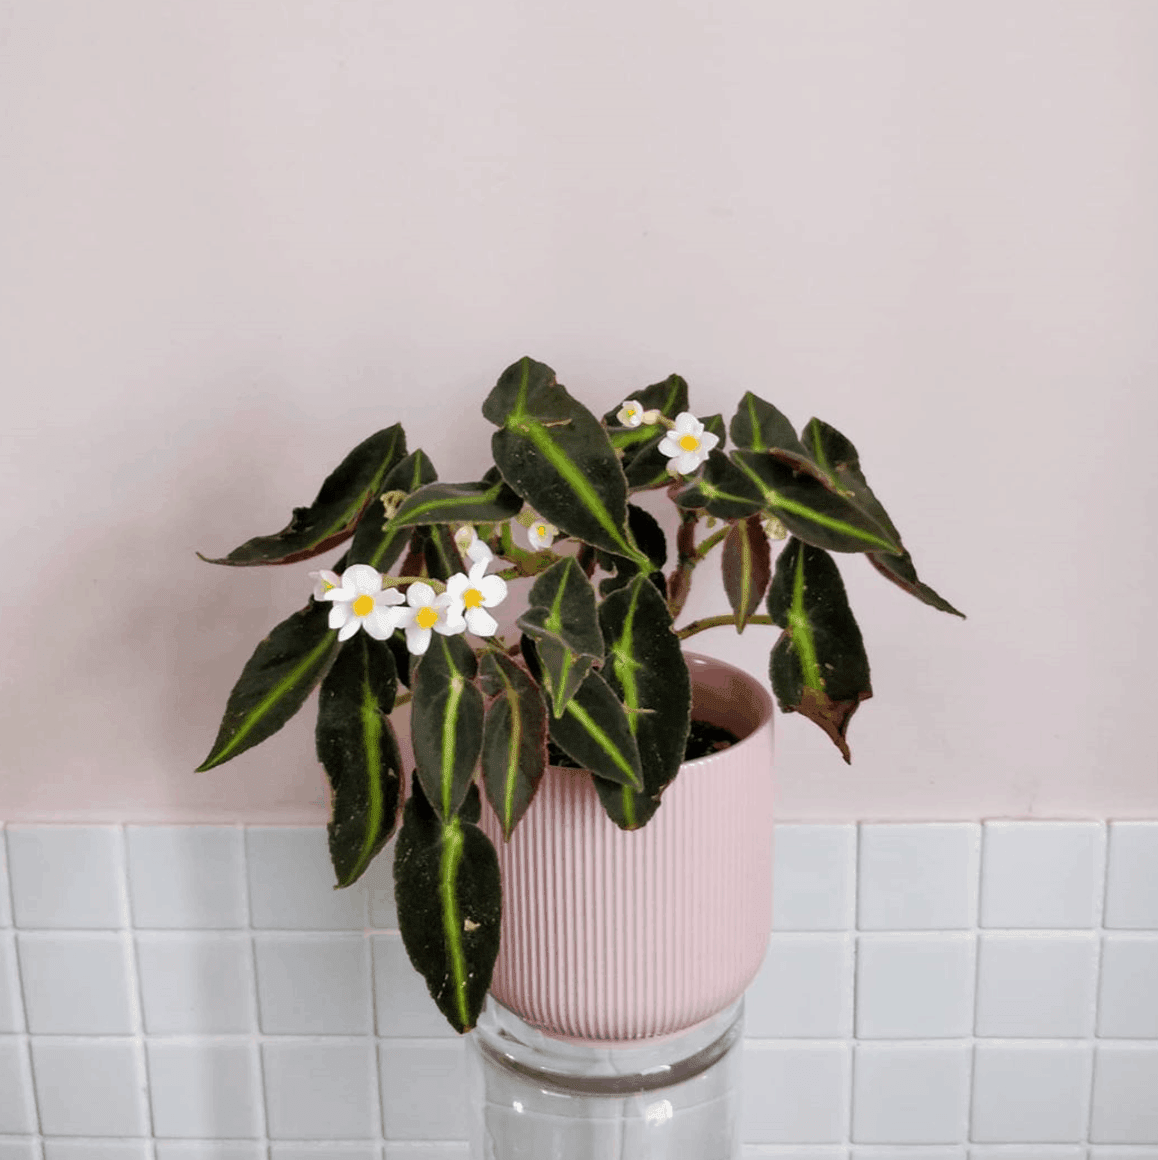 Begonia Listada Plant Care